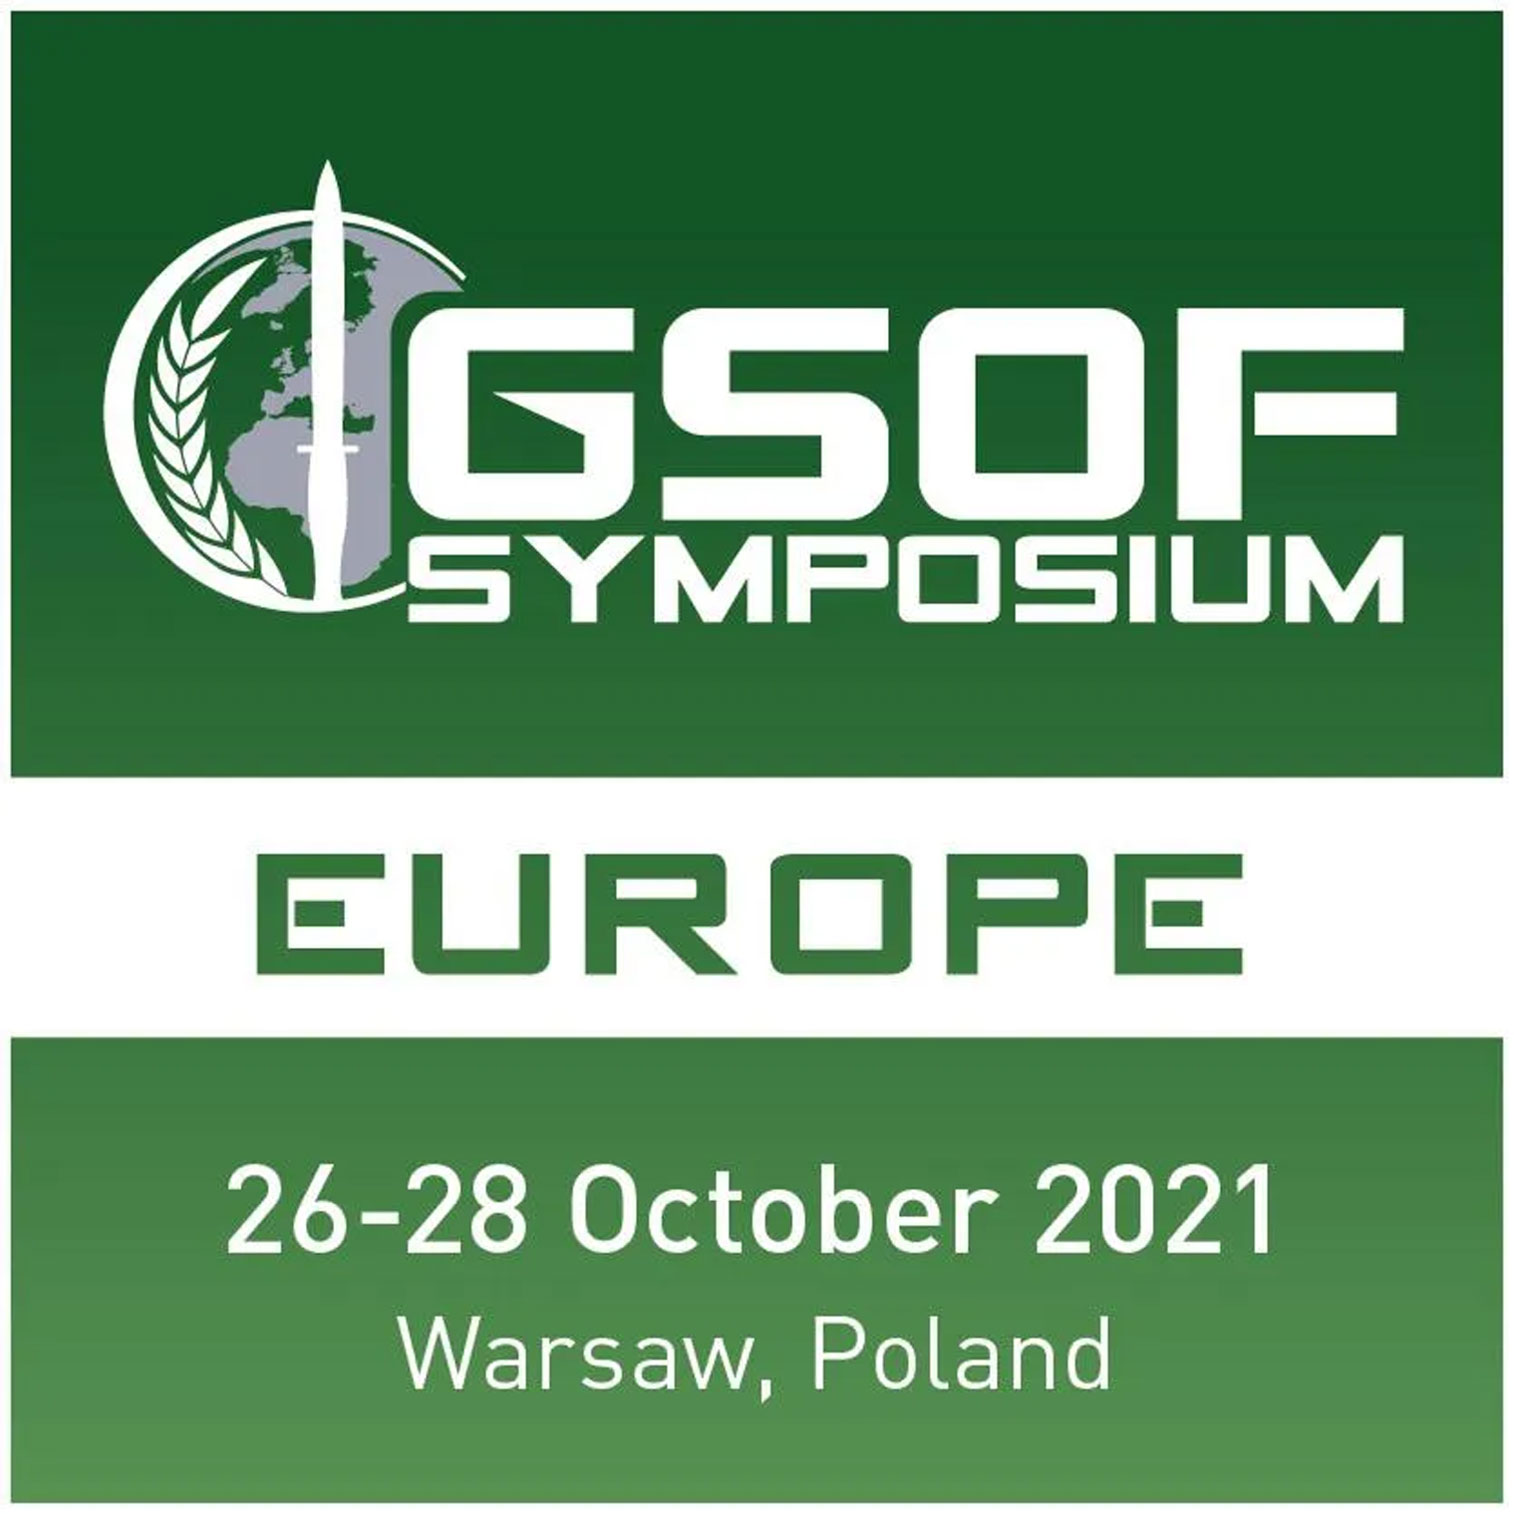 Preligens to exhibit at GSOF Symposium Europe 2021